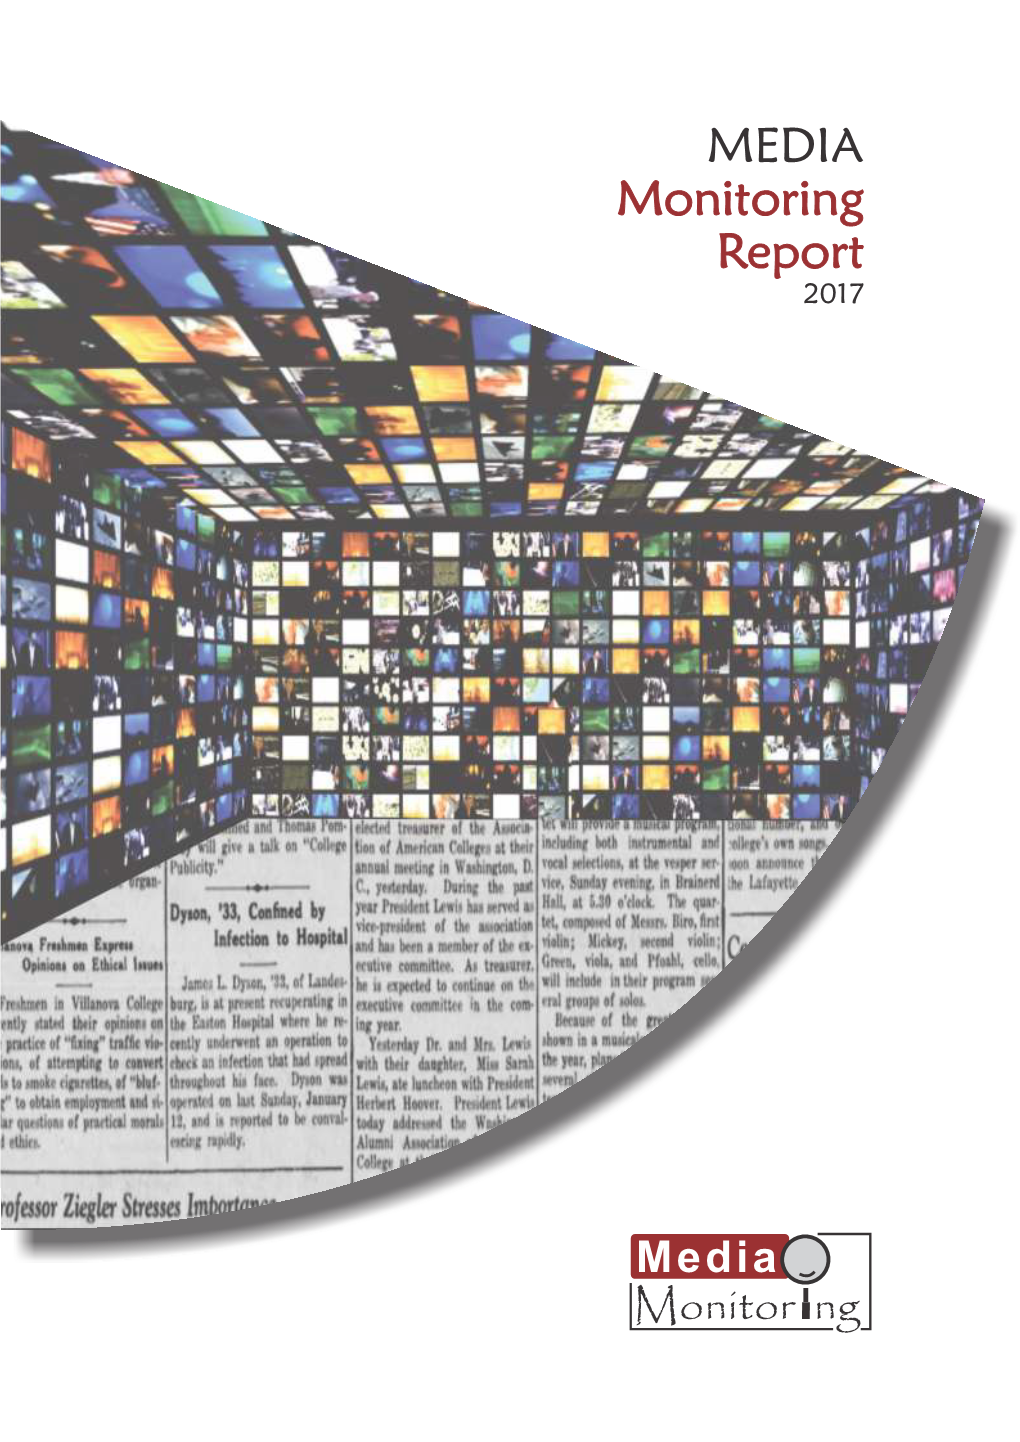 MEDIA Monitoring Report 2017